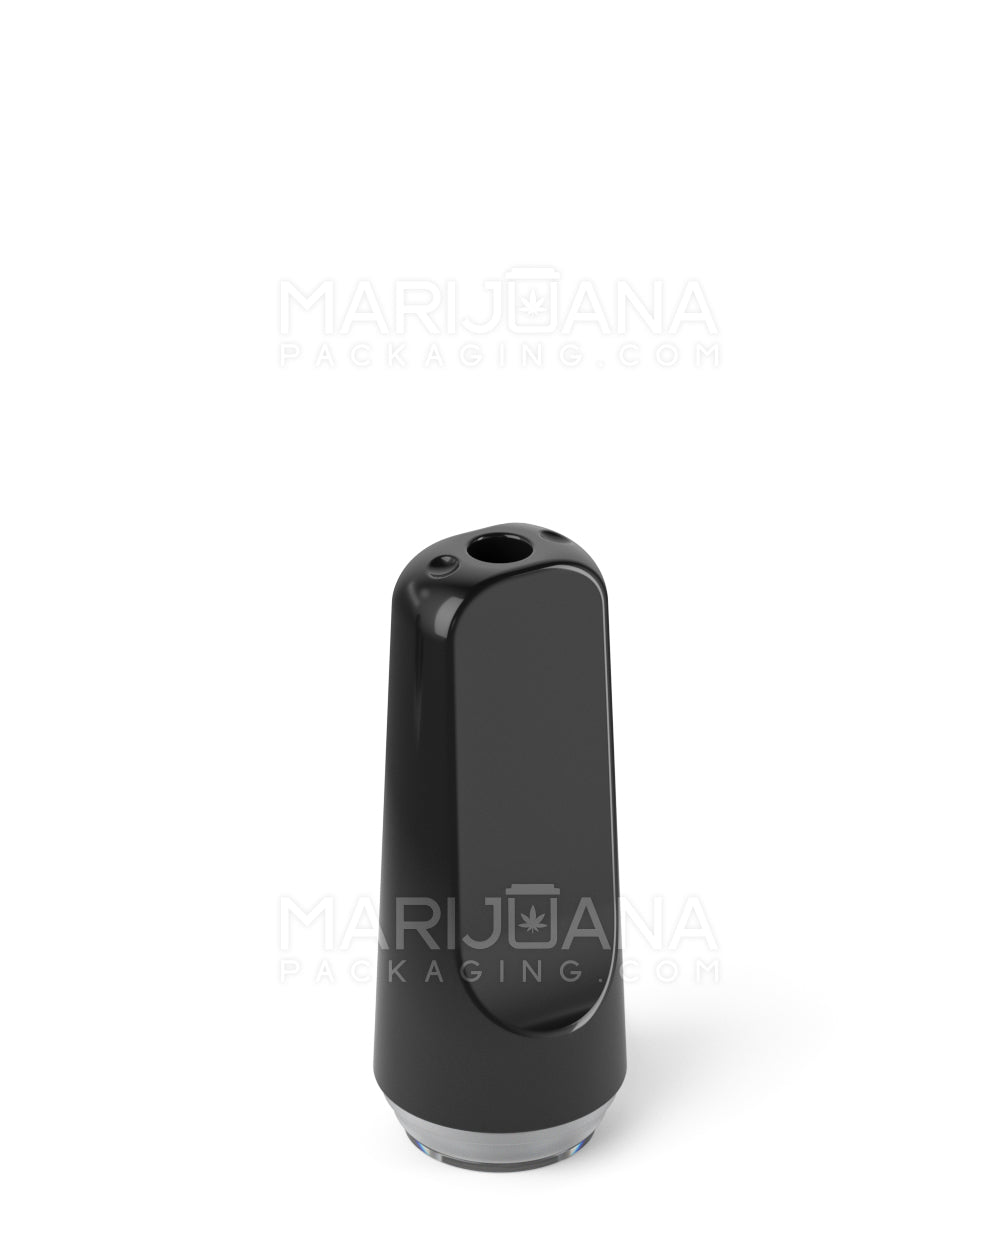 RAE | Flat Vape Mouthpiece for Hand Press Plastic Cartridges | Black Plastic - Hand Press - 400 Count - 3